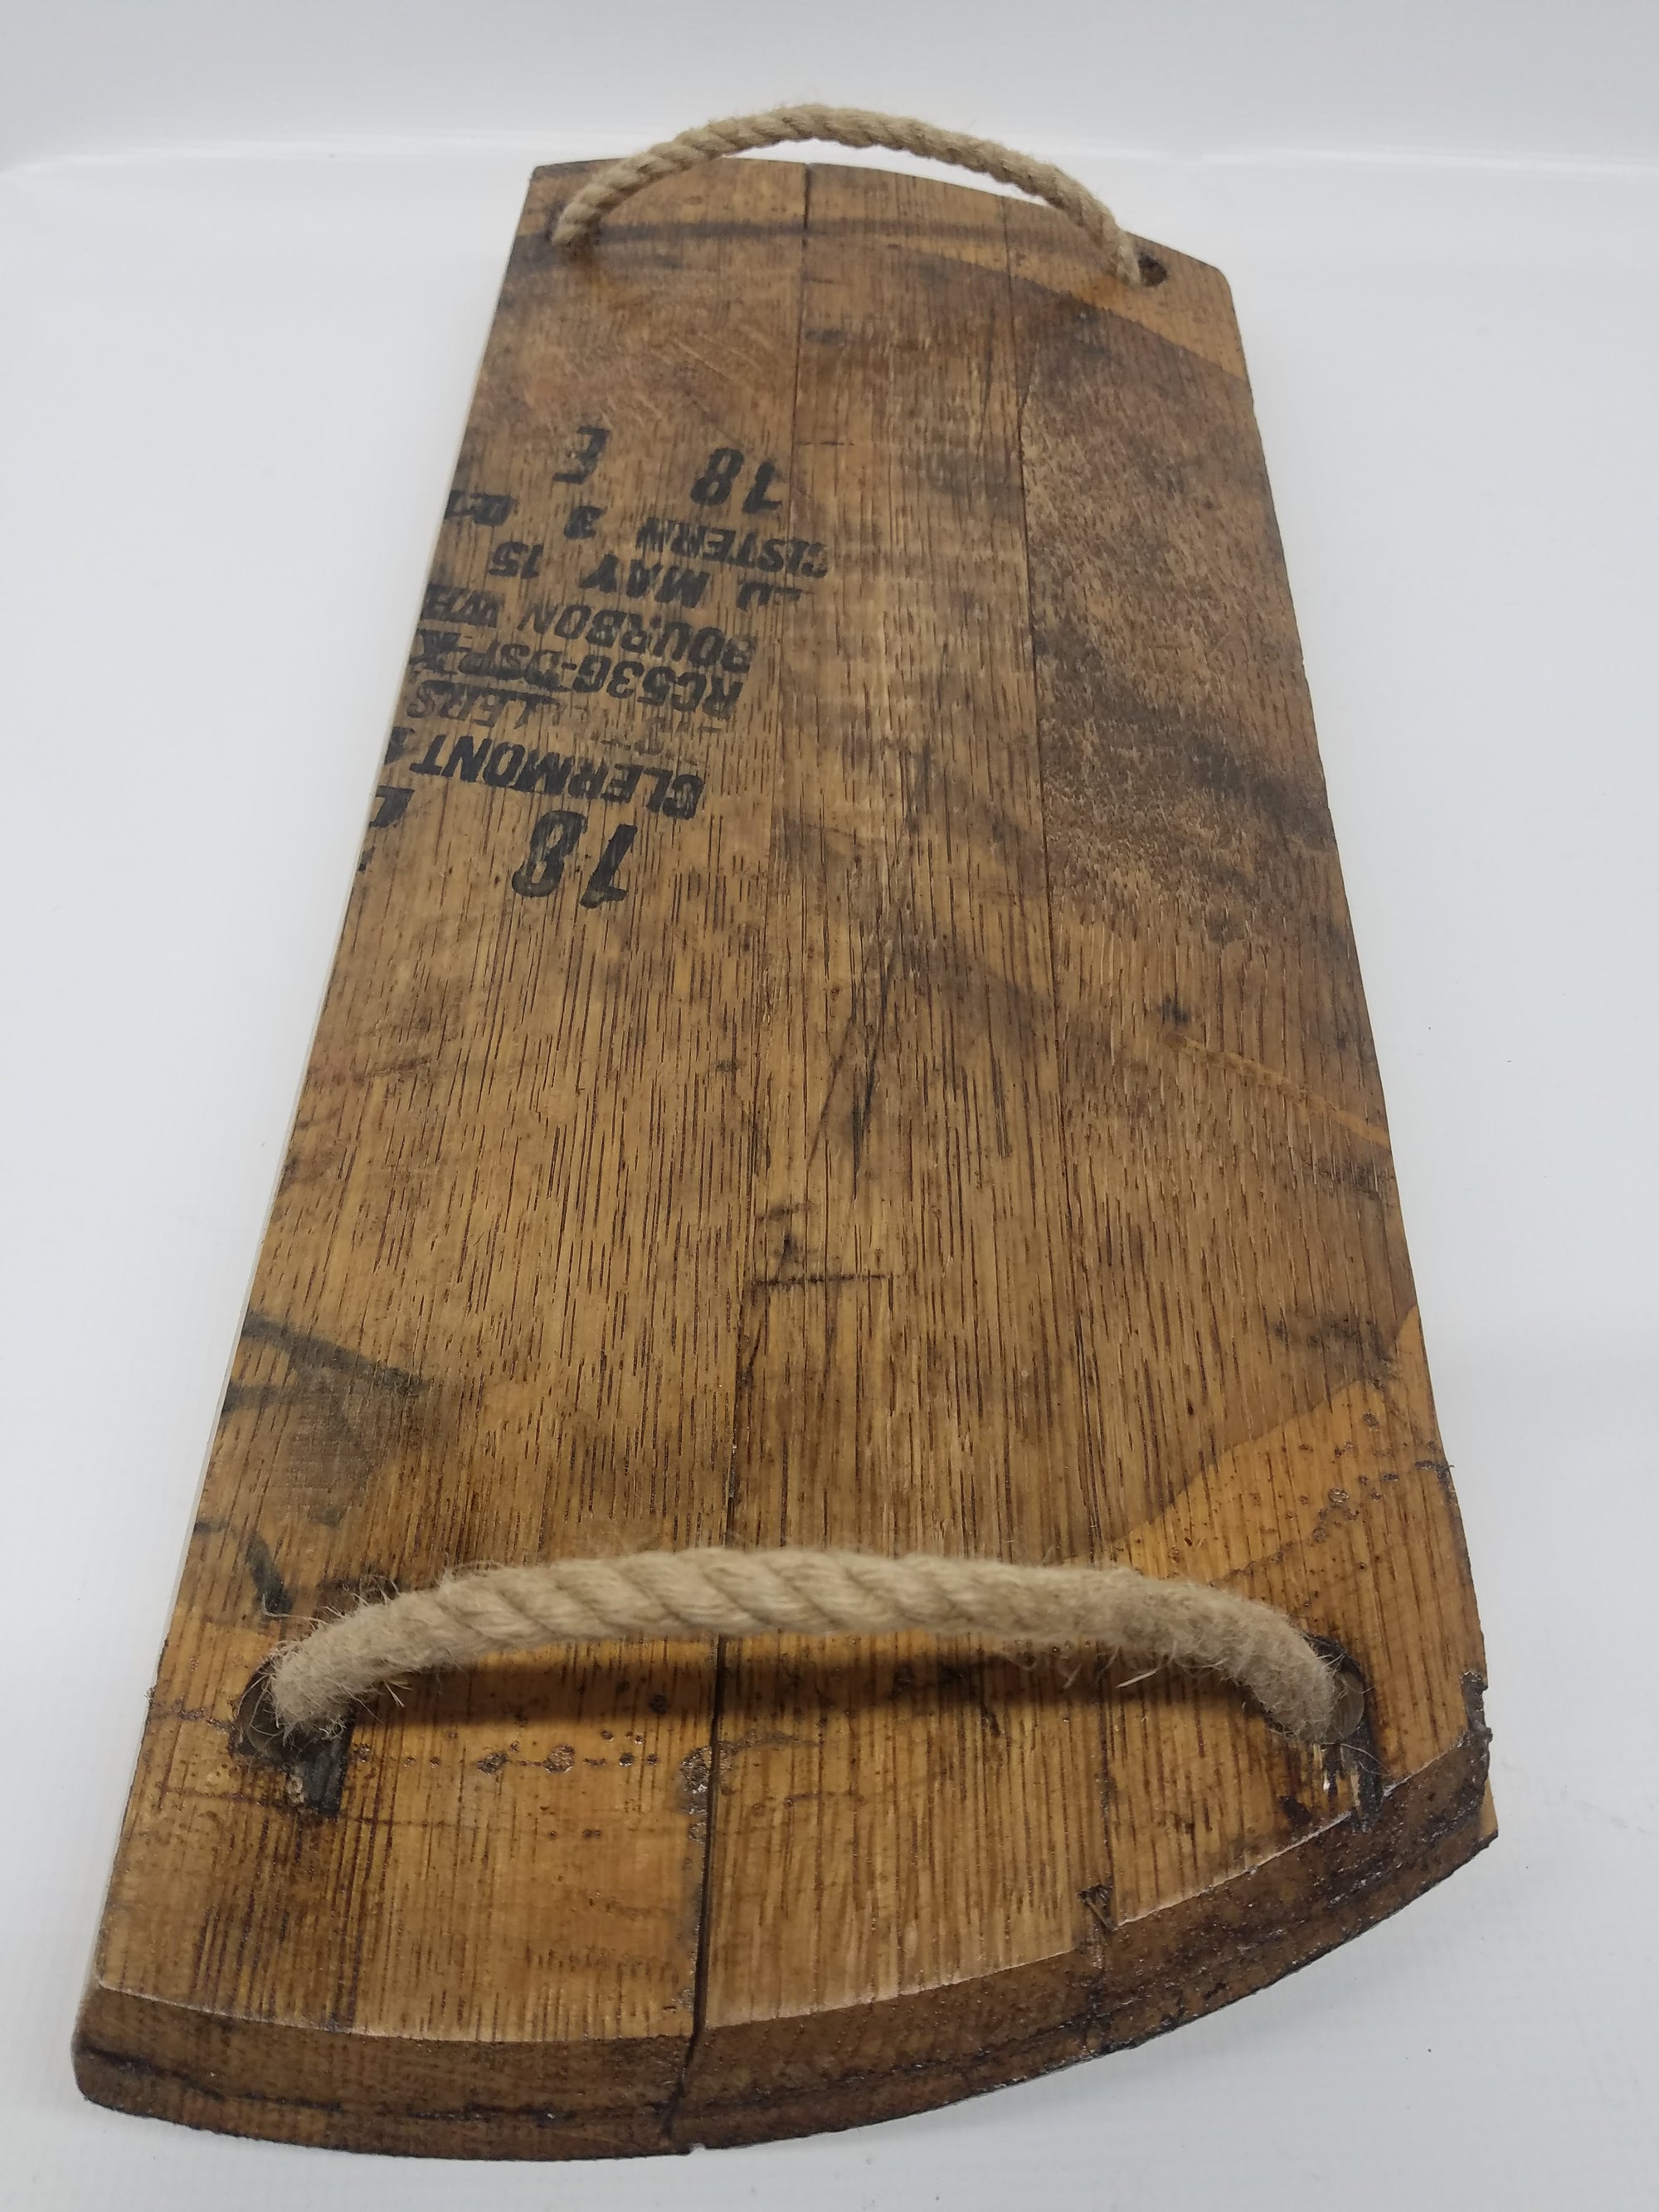 Bourbon Barrel Serving Board With Handles- Authentic Reclaimed Kentucky Bourbon Barrel- Barware- Reclaimed Wood- Bourbon Gift- Gift for Him